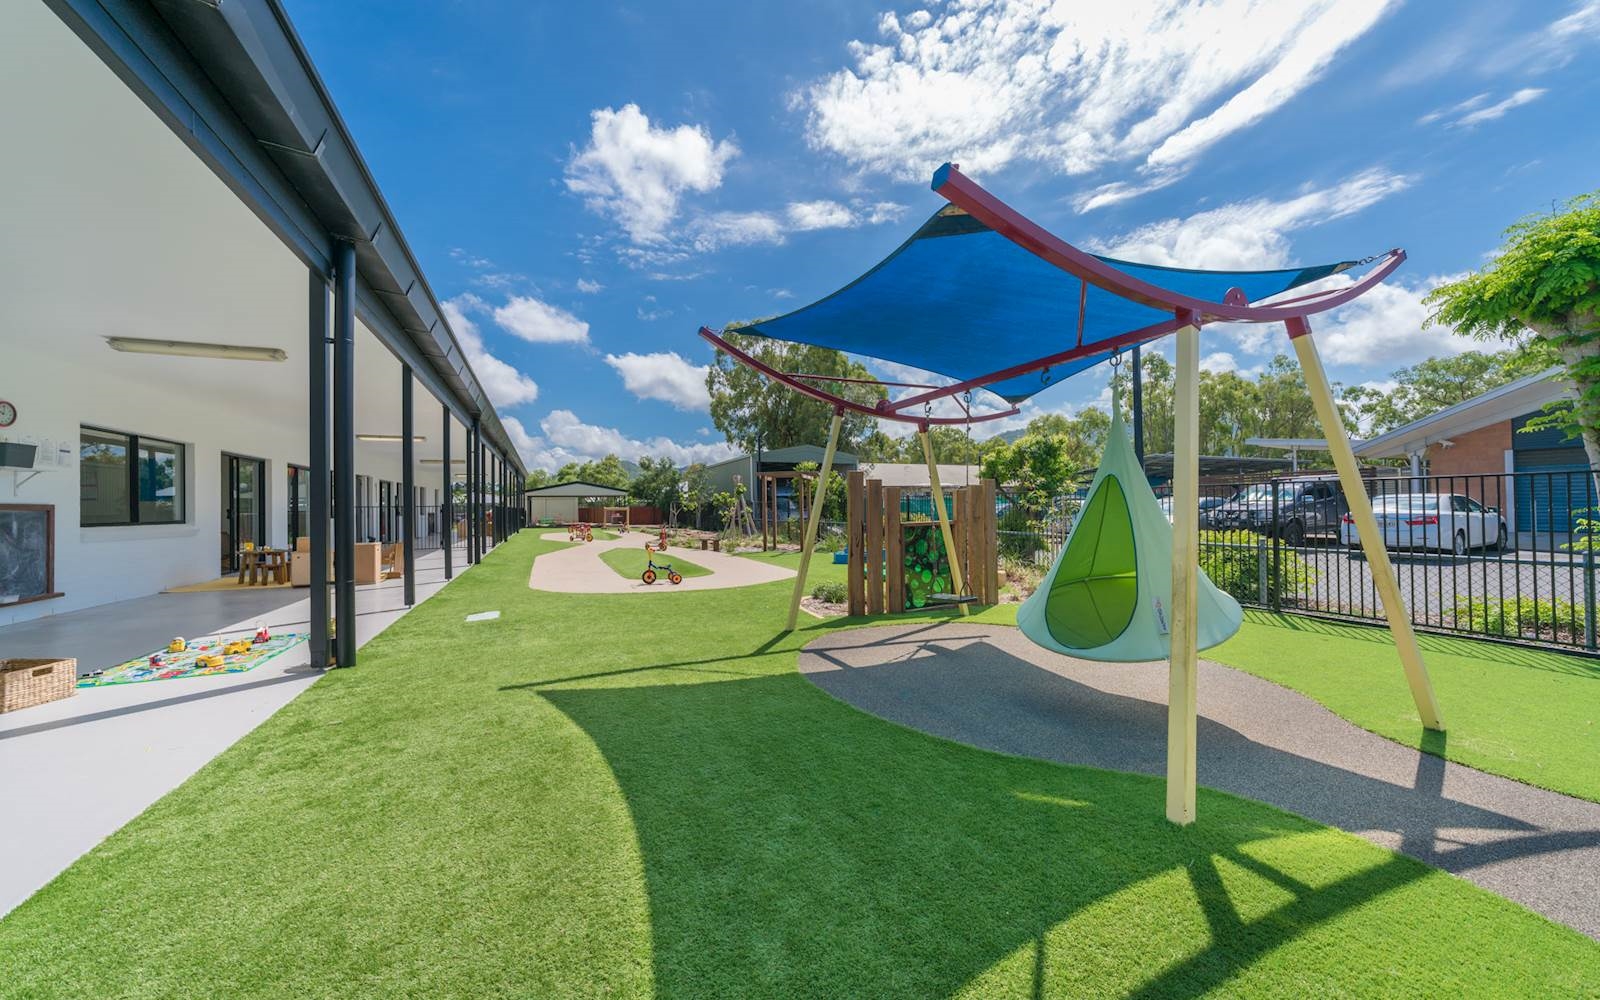 Little Zebra Childcare Centre Rockhampton